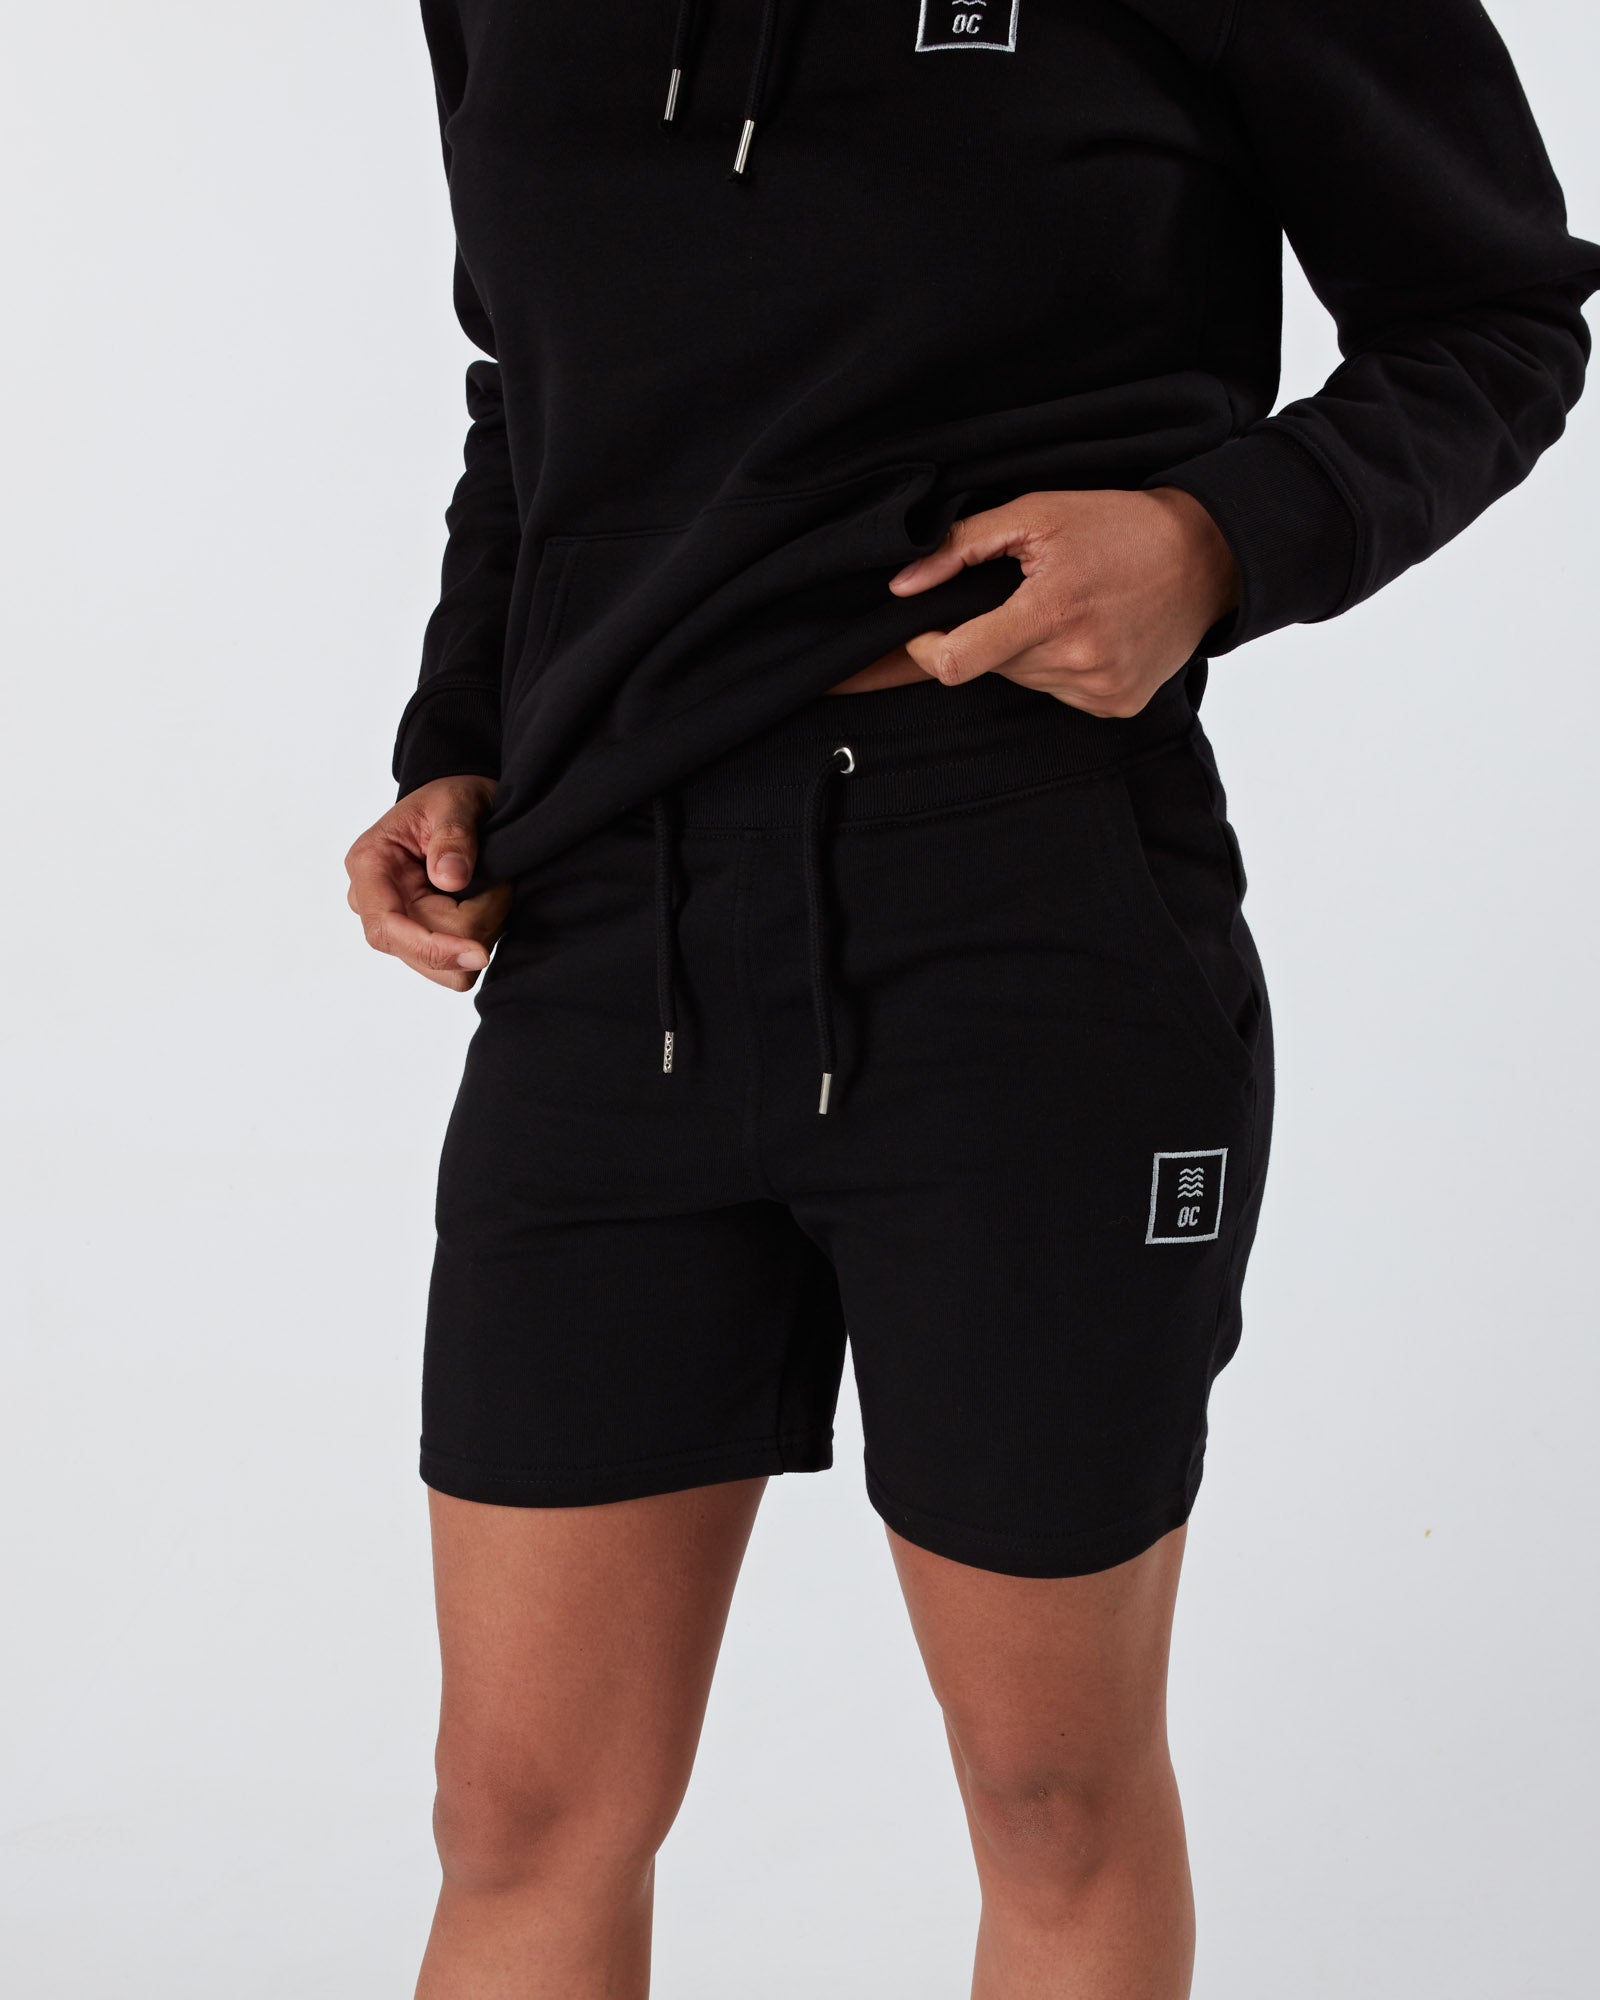 OC Lux Shorts - Black